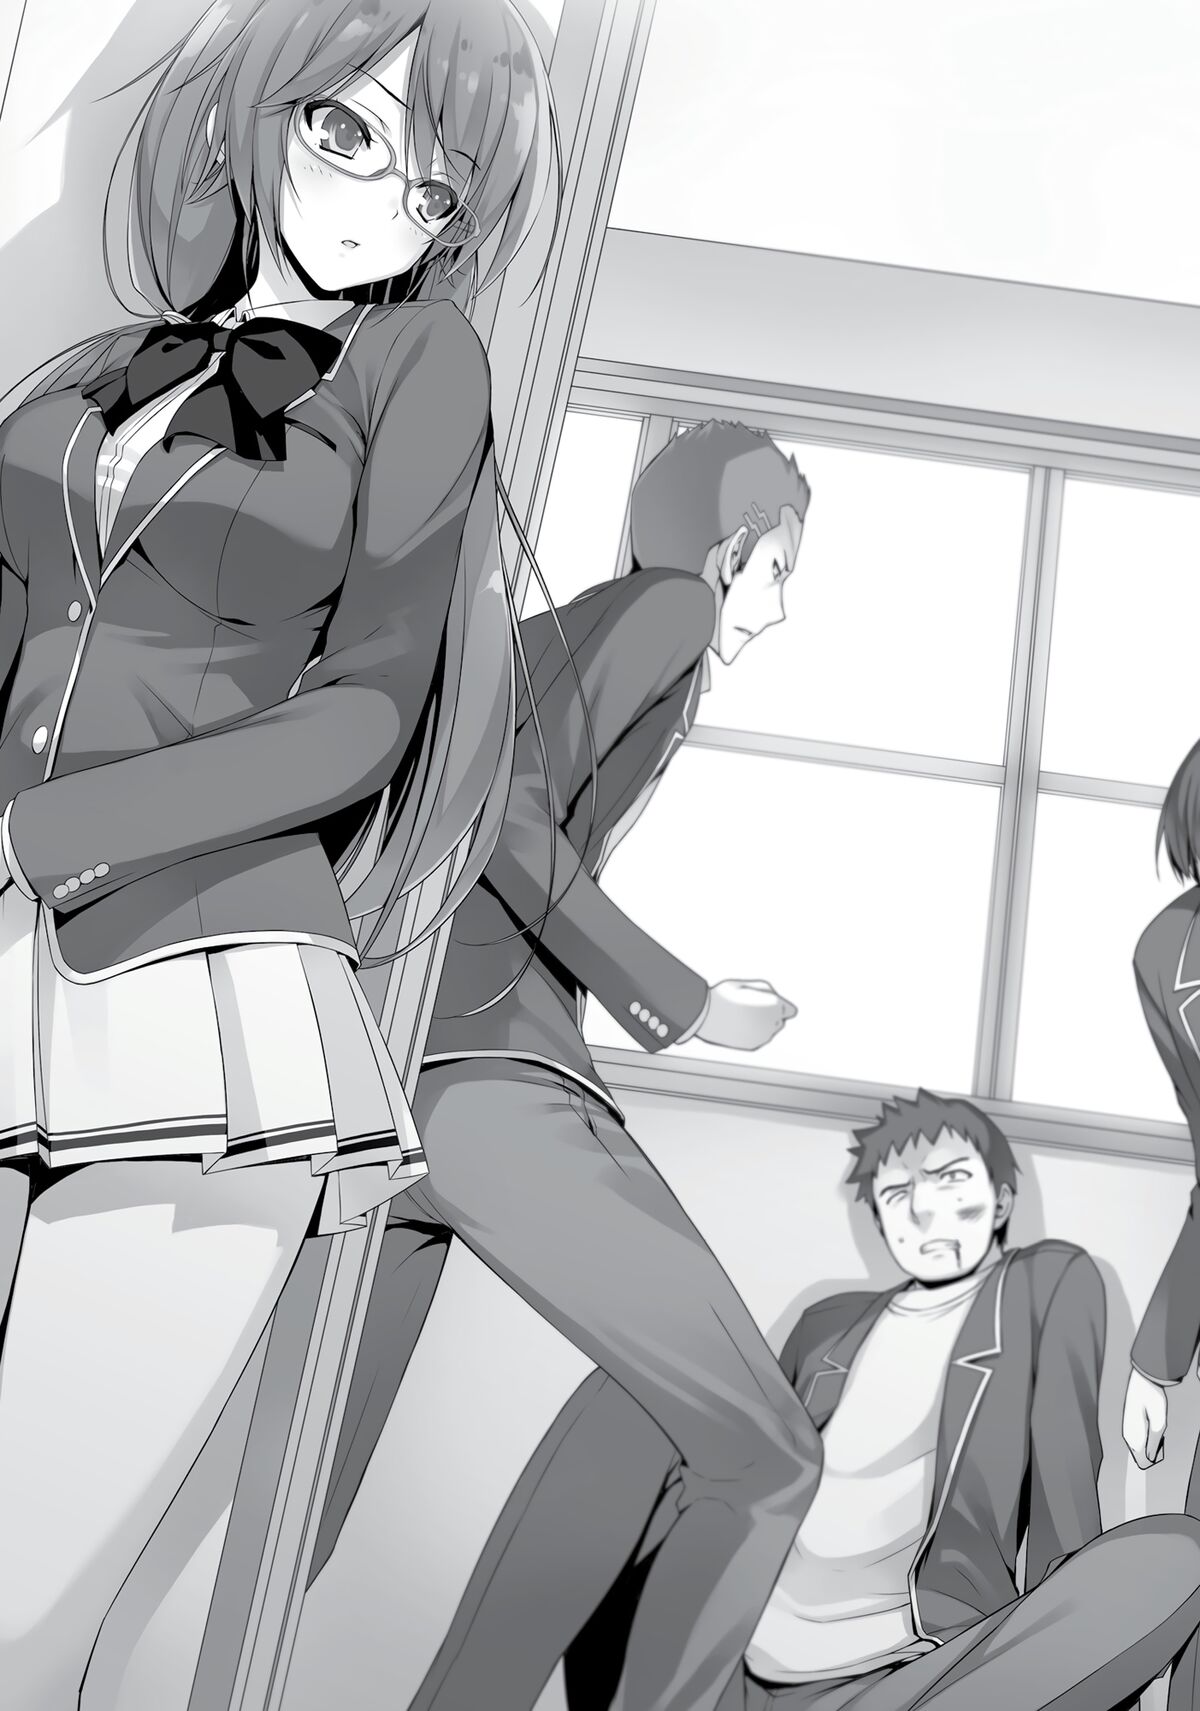 FIGHT CLUB!!! Classroom of the Elite Season 2 Episode 12 Anime Group  Reaction 